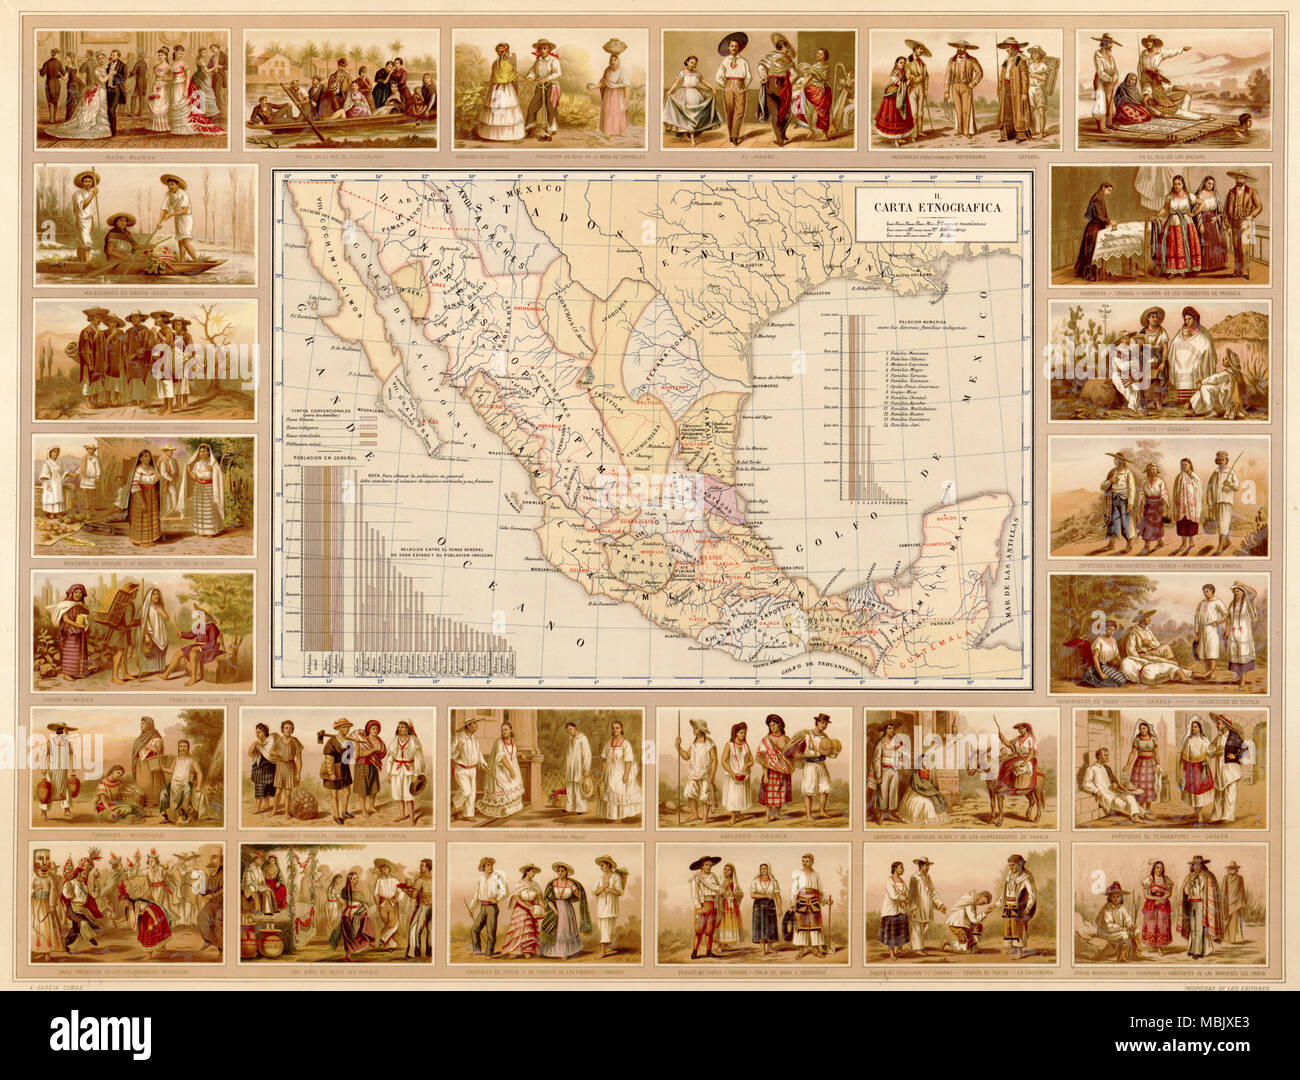 Ethnographic Map of Mexico - 1885 Stock Photo